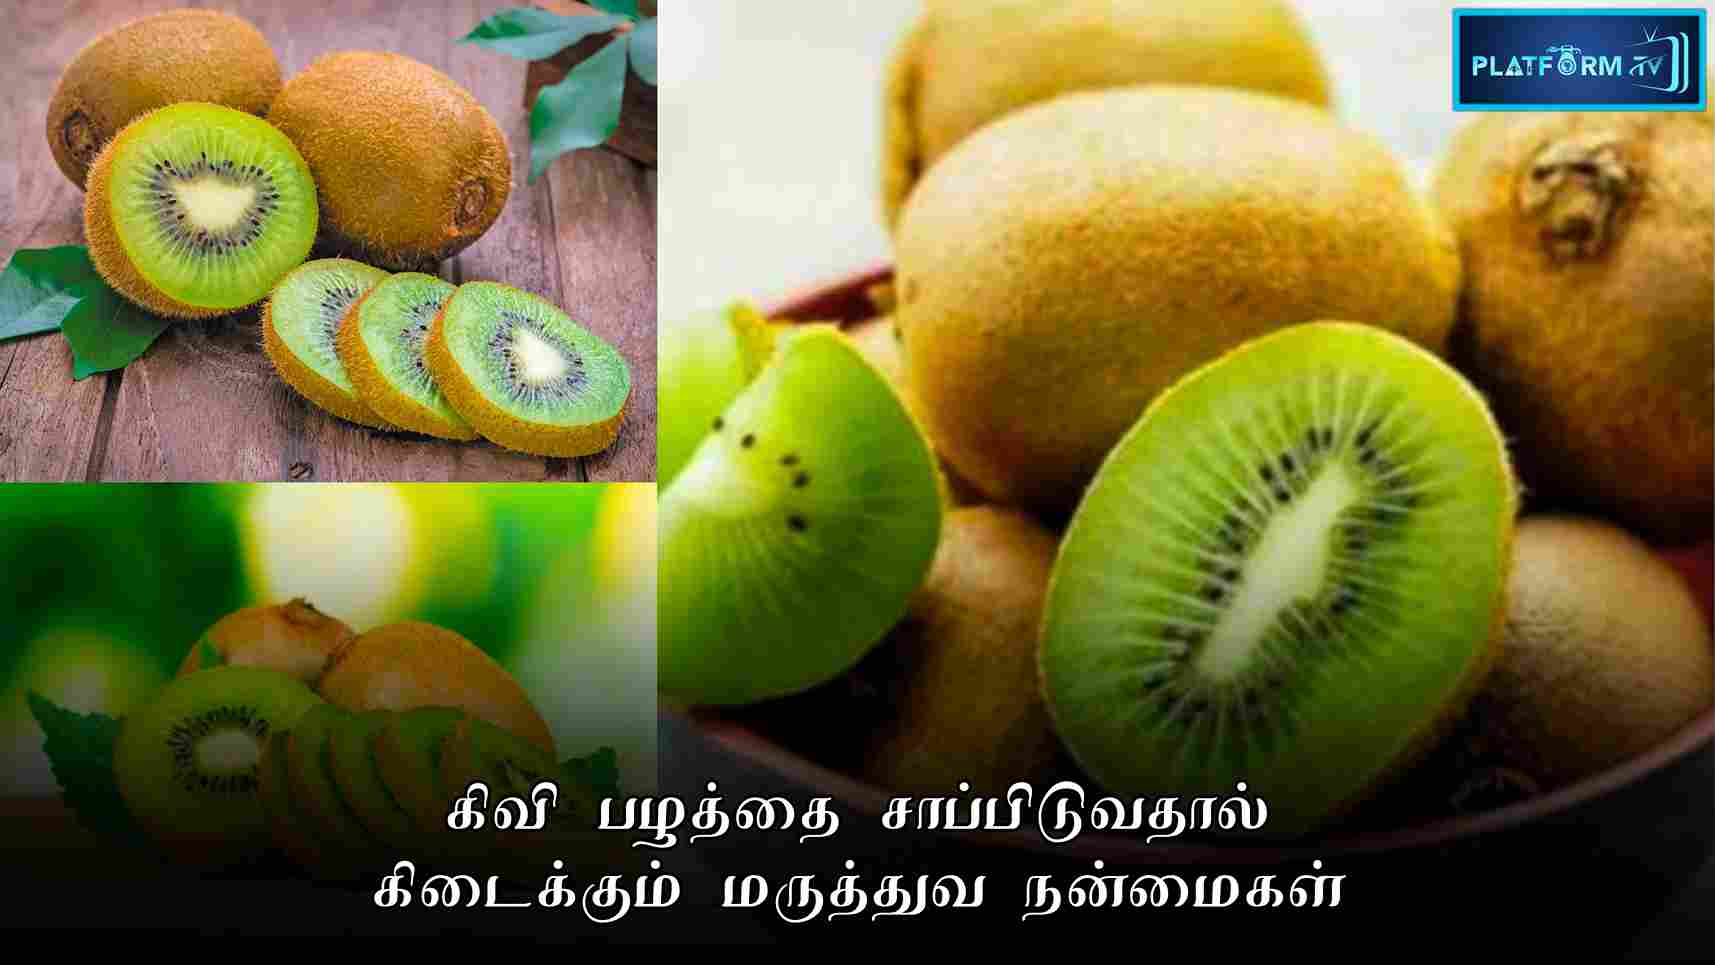 Kiwi Fruit Benefits In Tamil - Platform Tamil